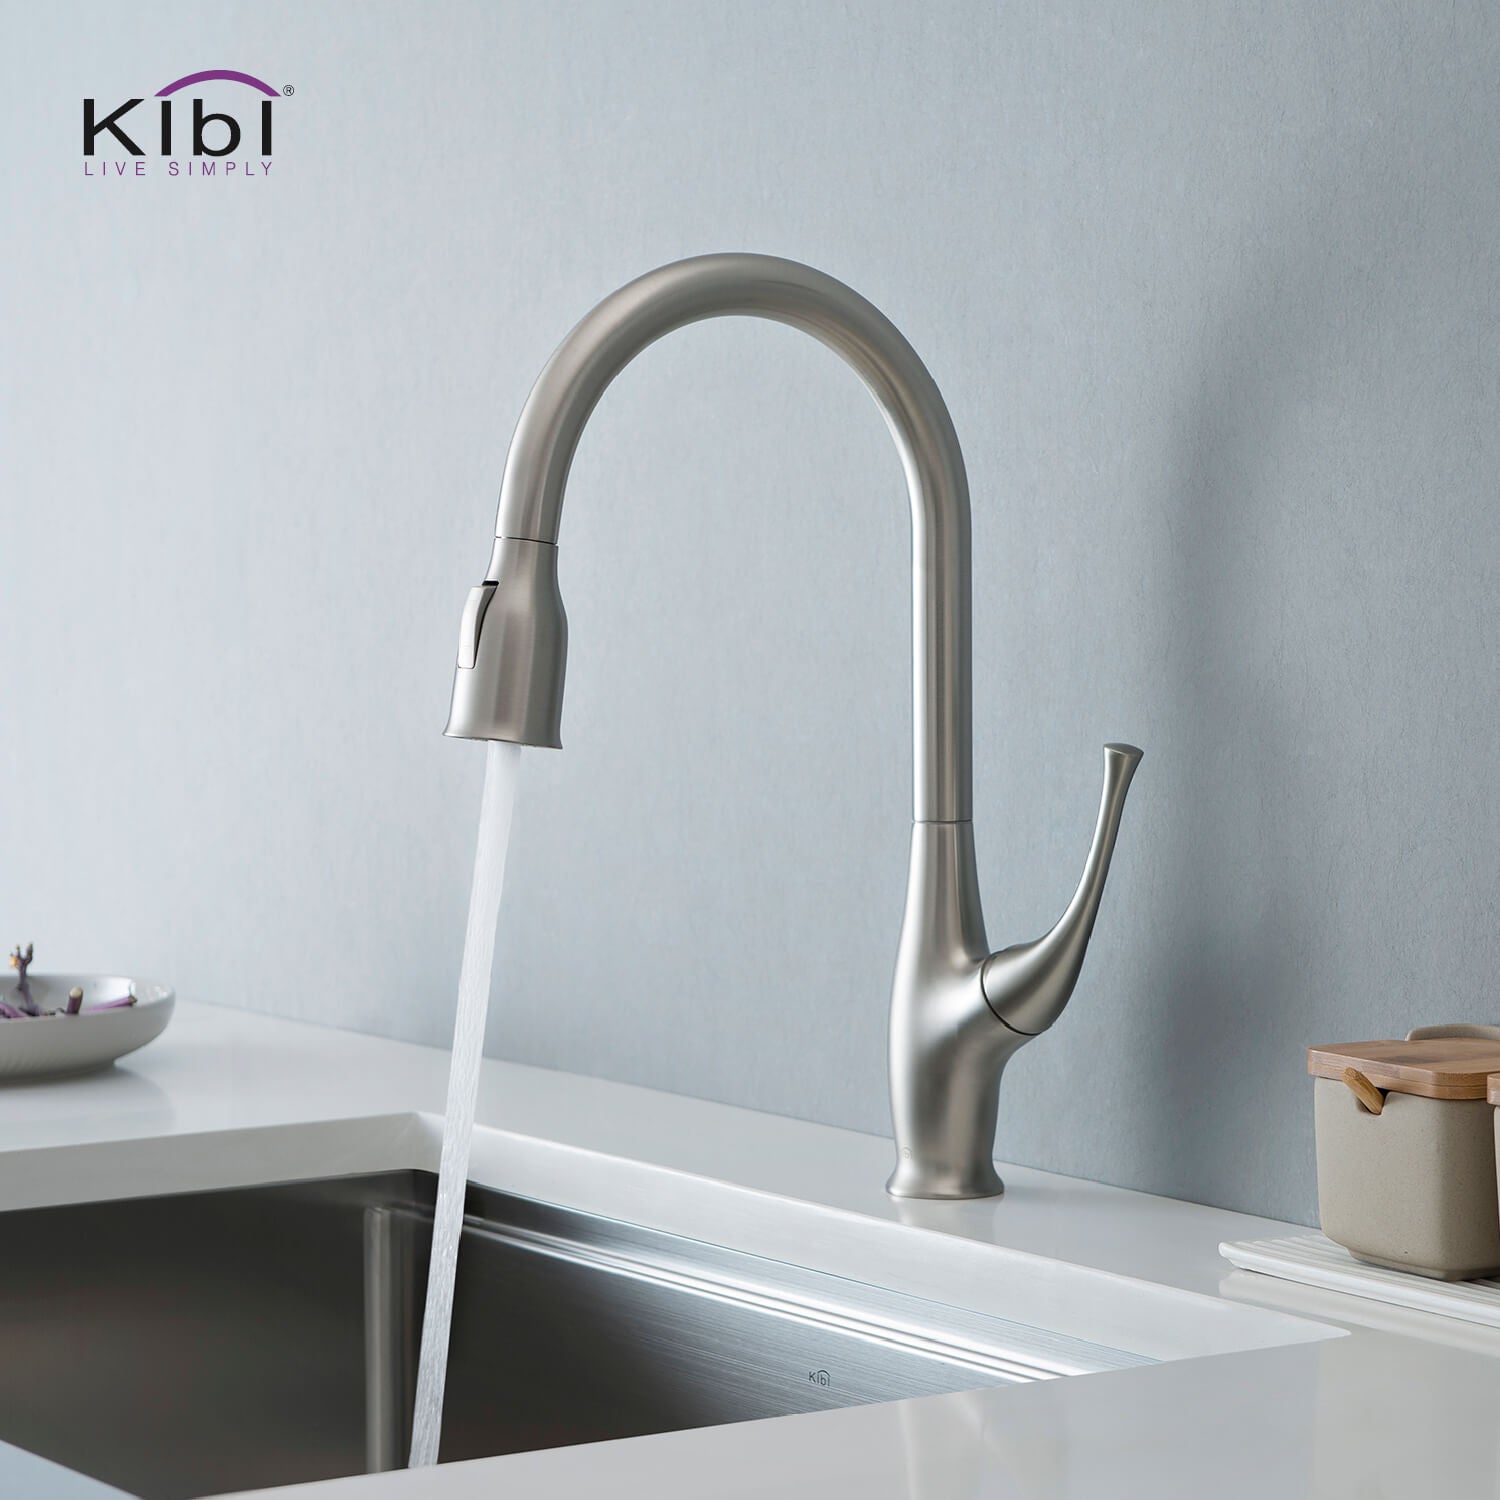 Kibi Cedar Single Handle High Arc Pull Down Kitchen Faucet in Brushed Nickel Finish